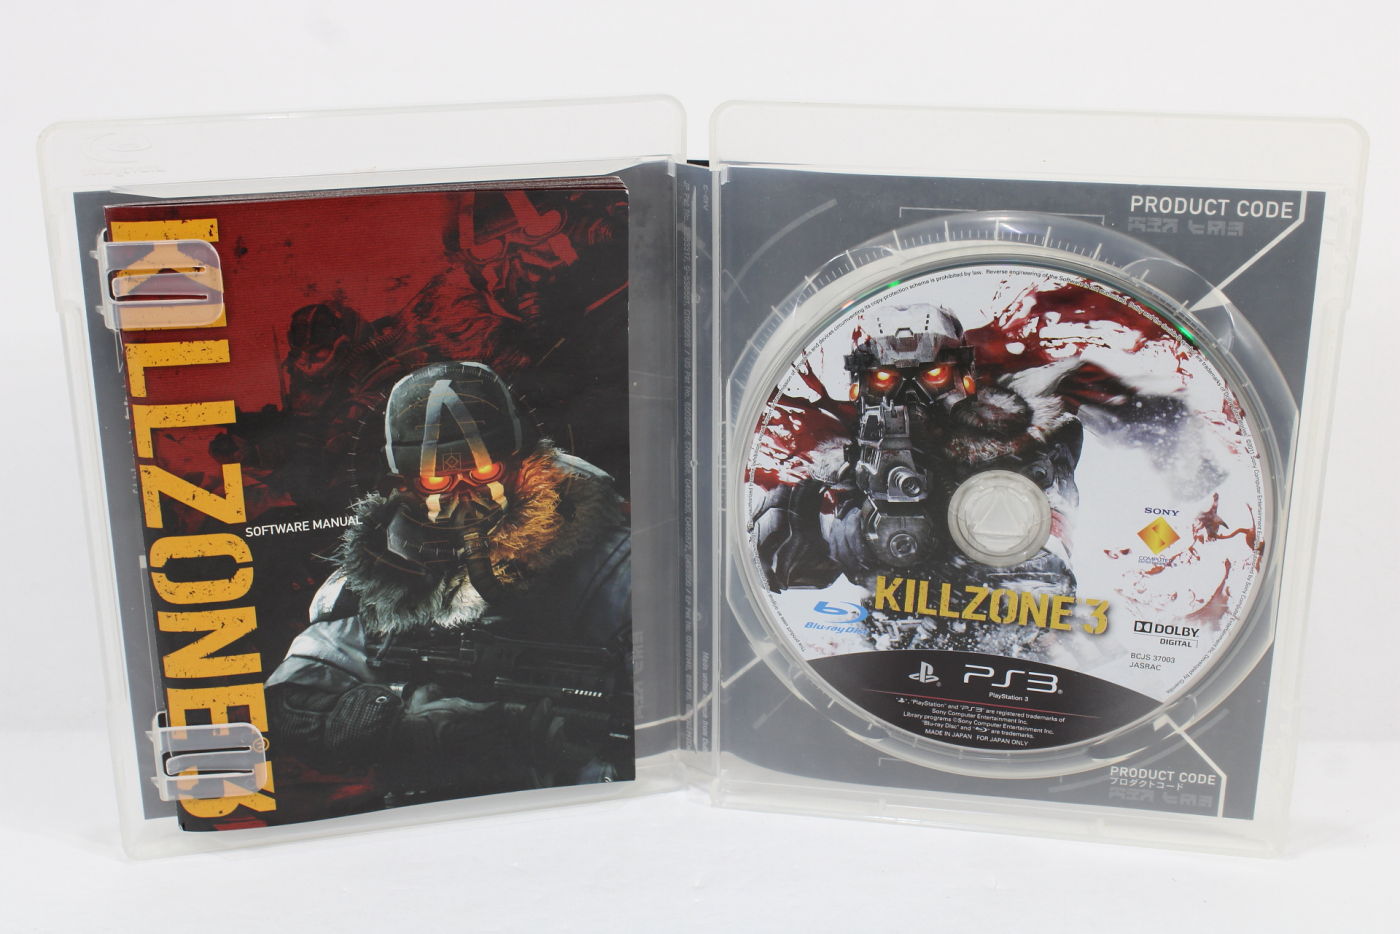 Killzone 3 (Complete) + Battlefield 4 (No Manual) PS3 Game Lot